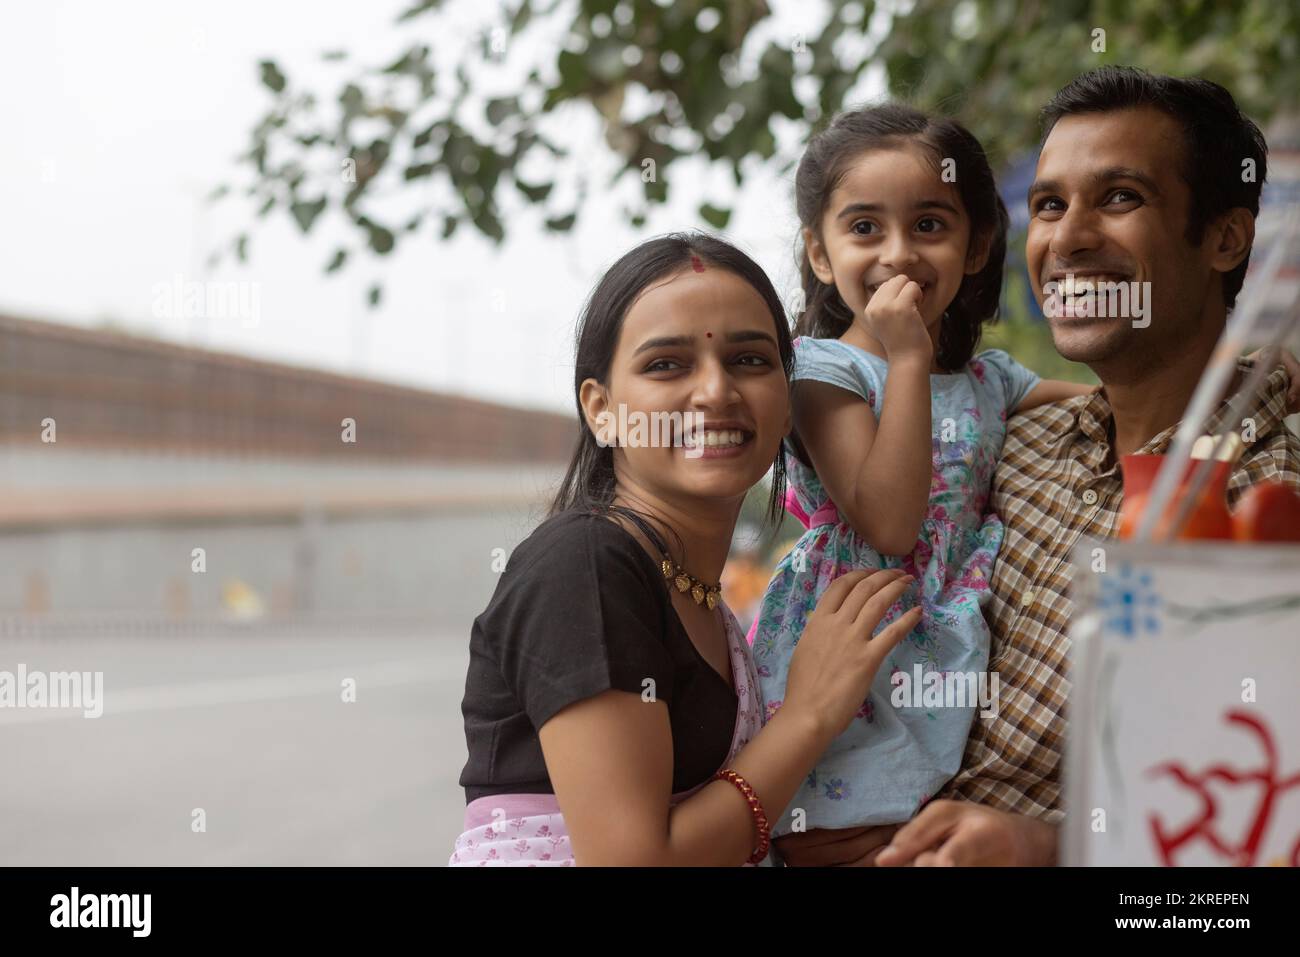 Portrait of happy family standing near street shop Stock Photo